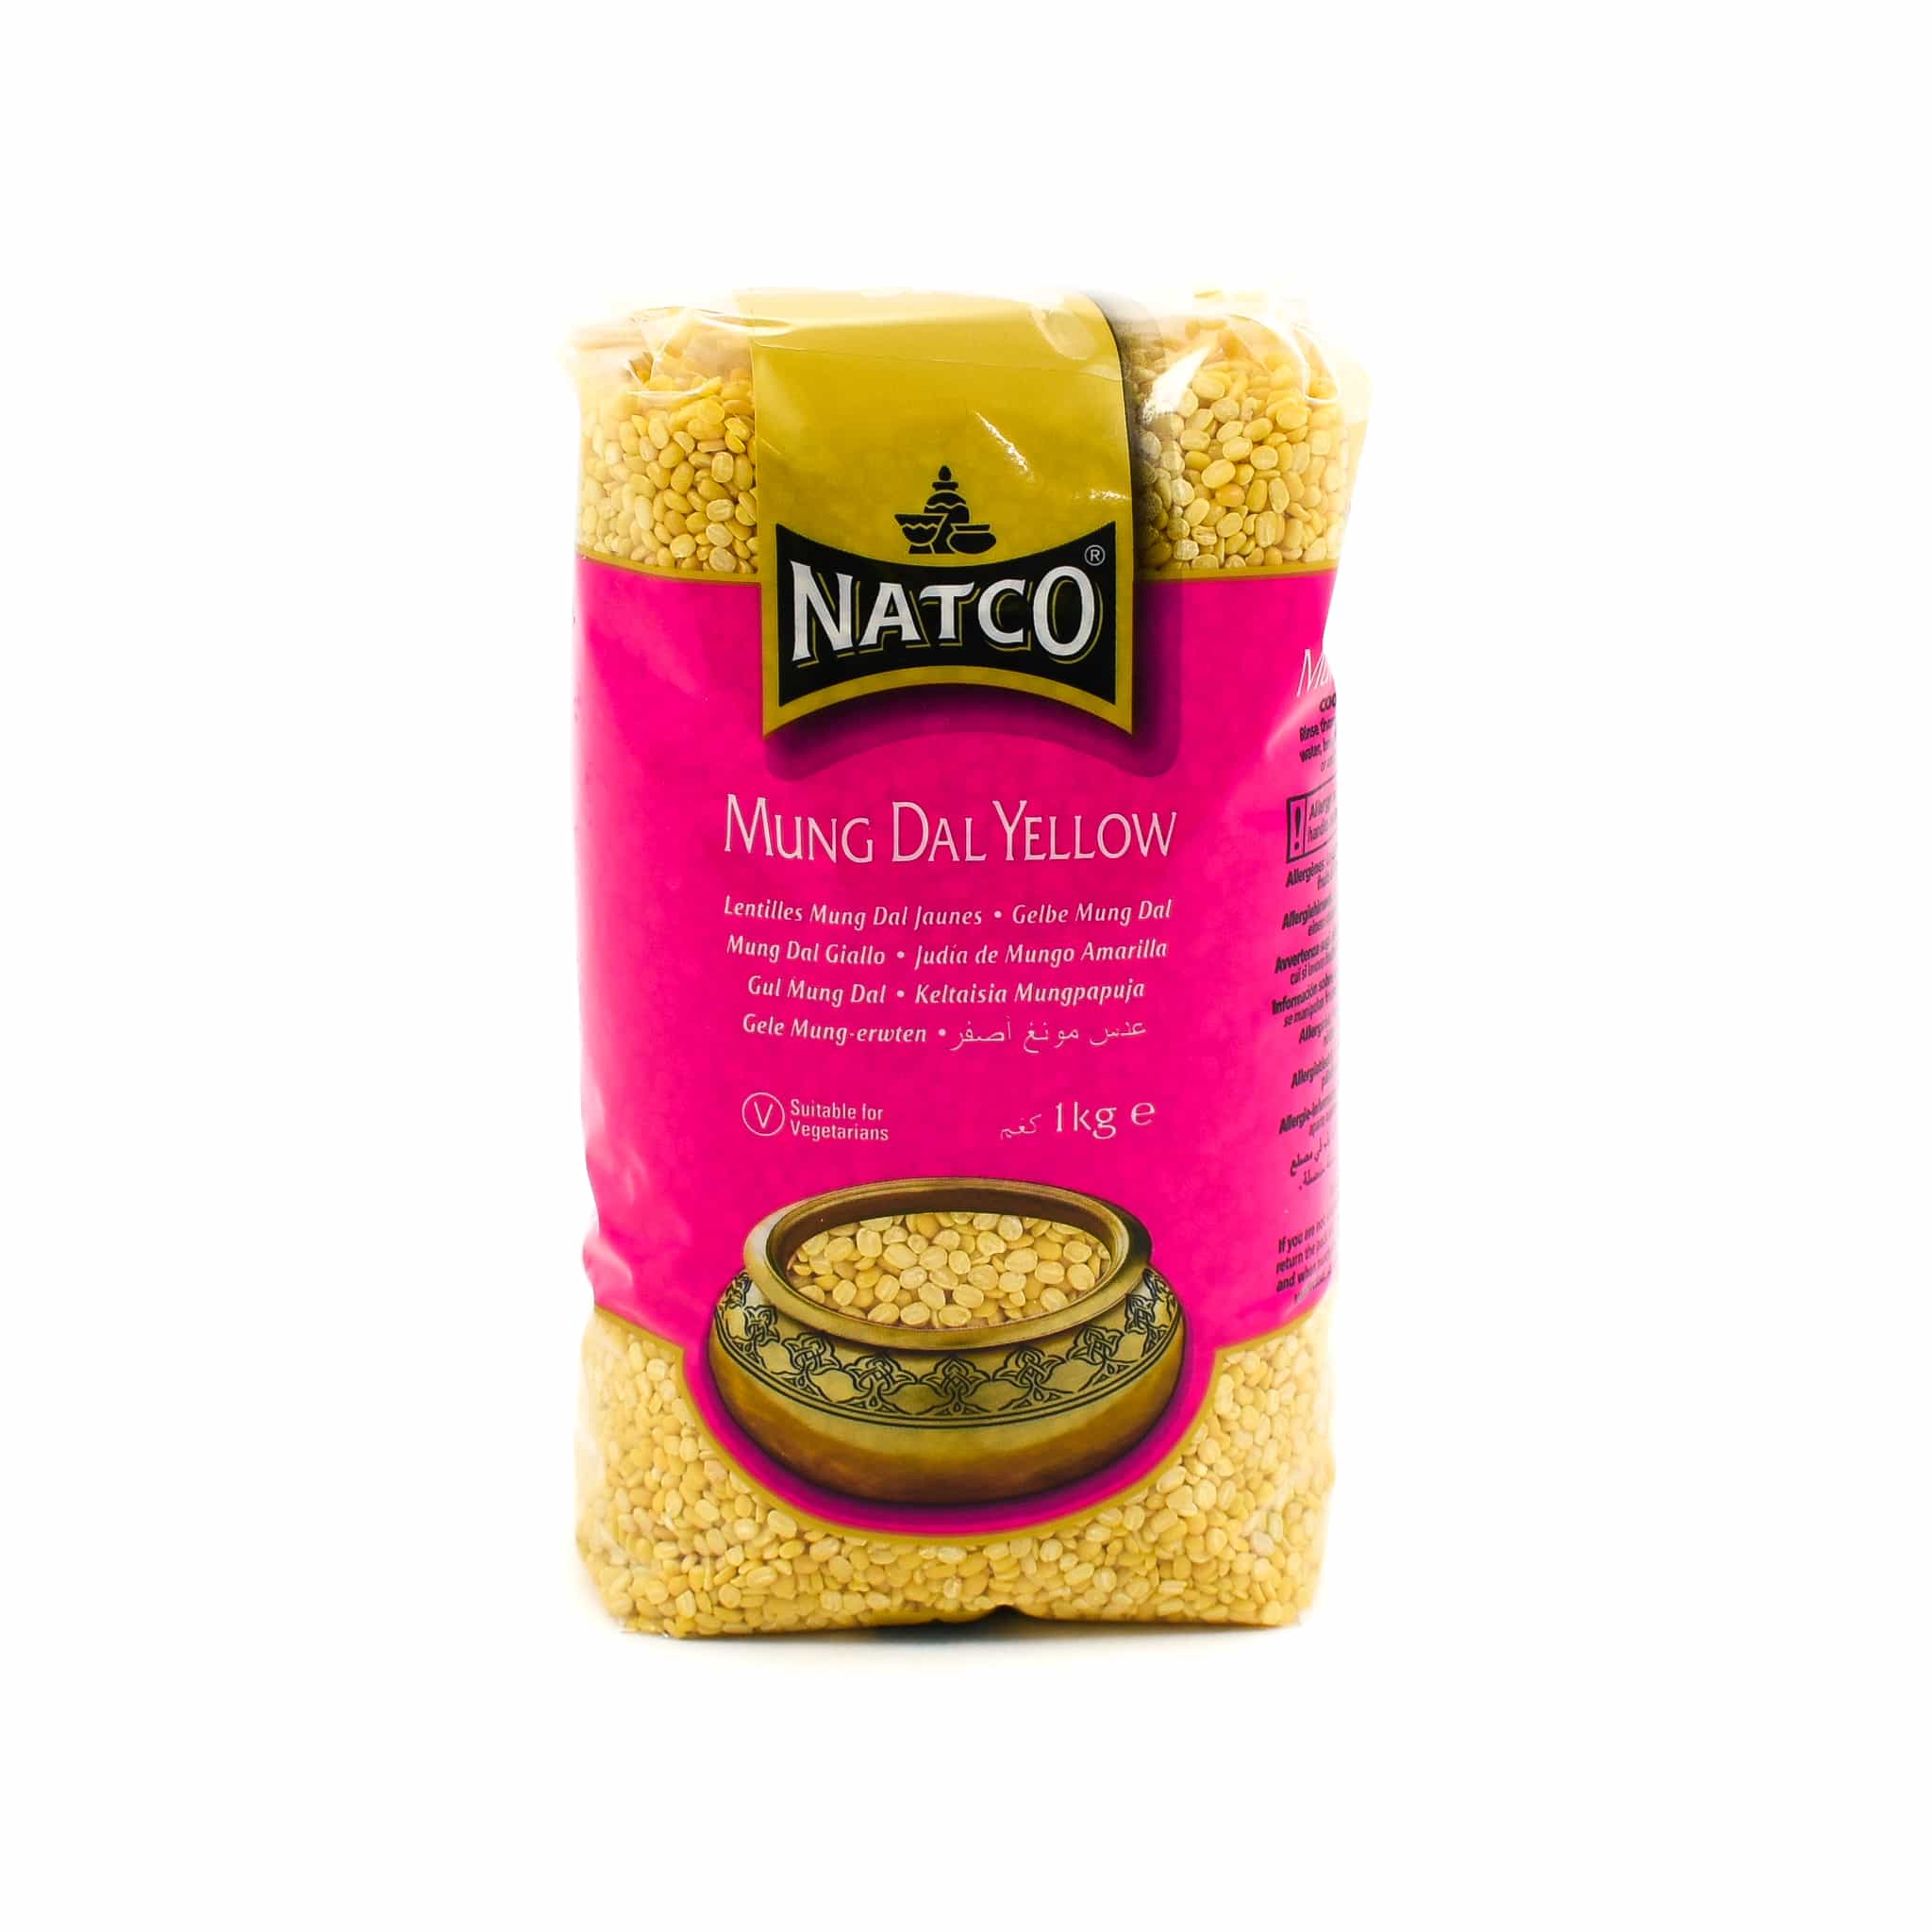 Natco Mung Dal Yellow 1kg